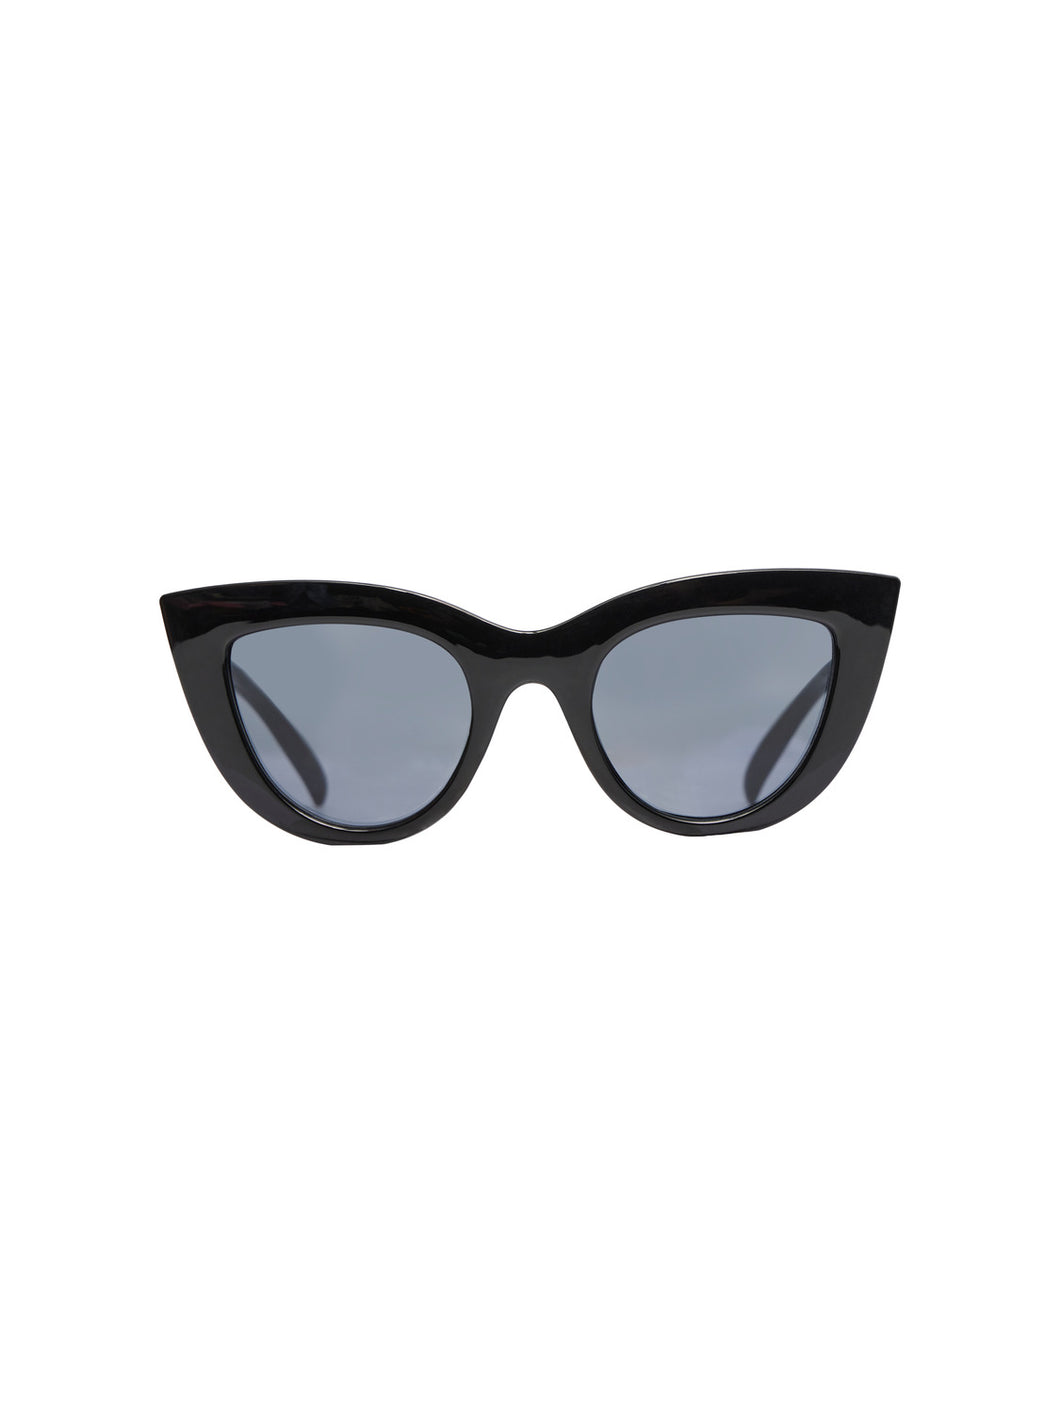 PCDONAI Sunglasses - Black